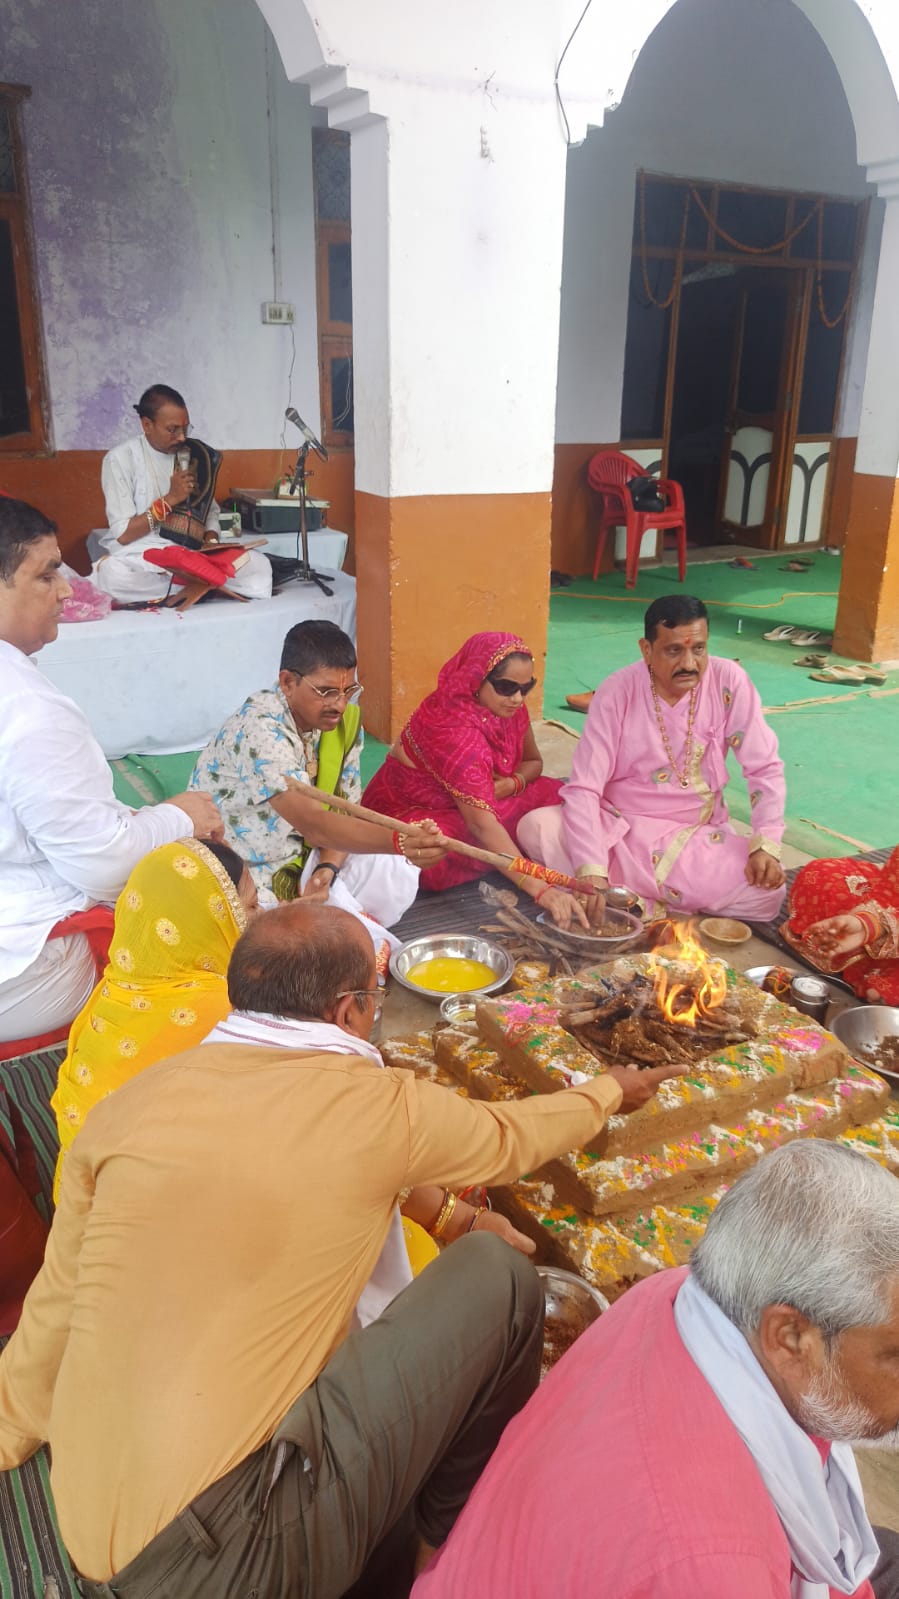 Shrimad Bhagwat Gita Gyan Yagya organized by Banke Bihari Seva Samiti performed full sacrifice